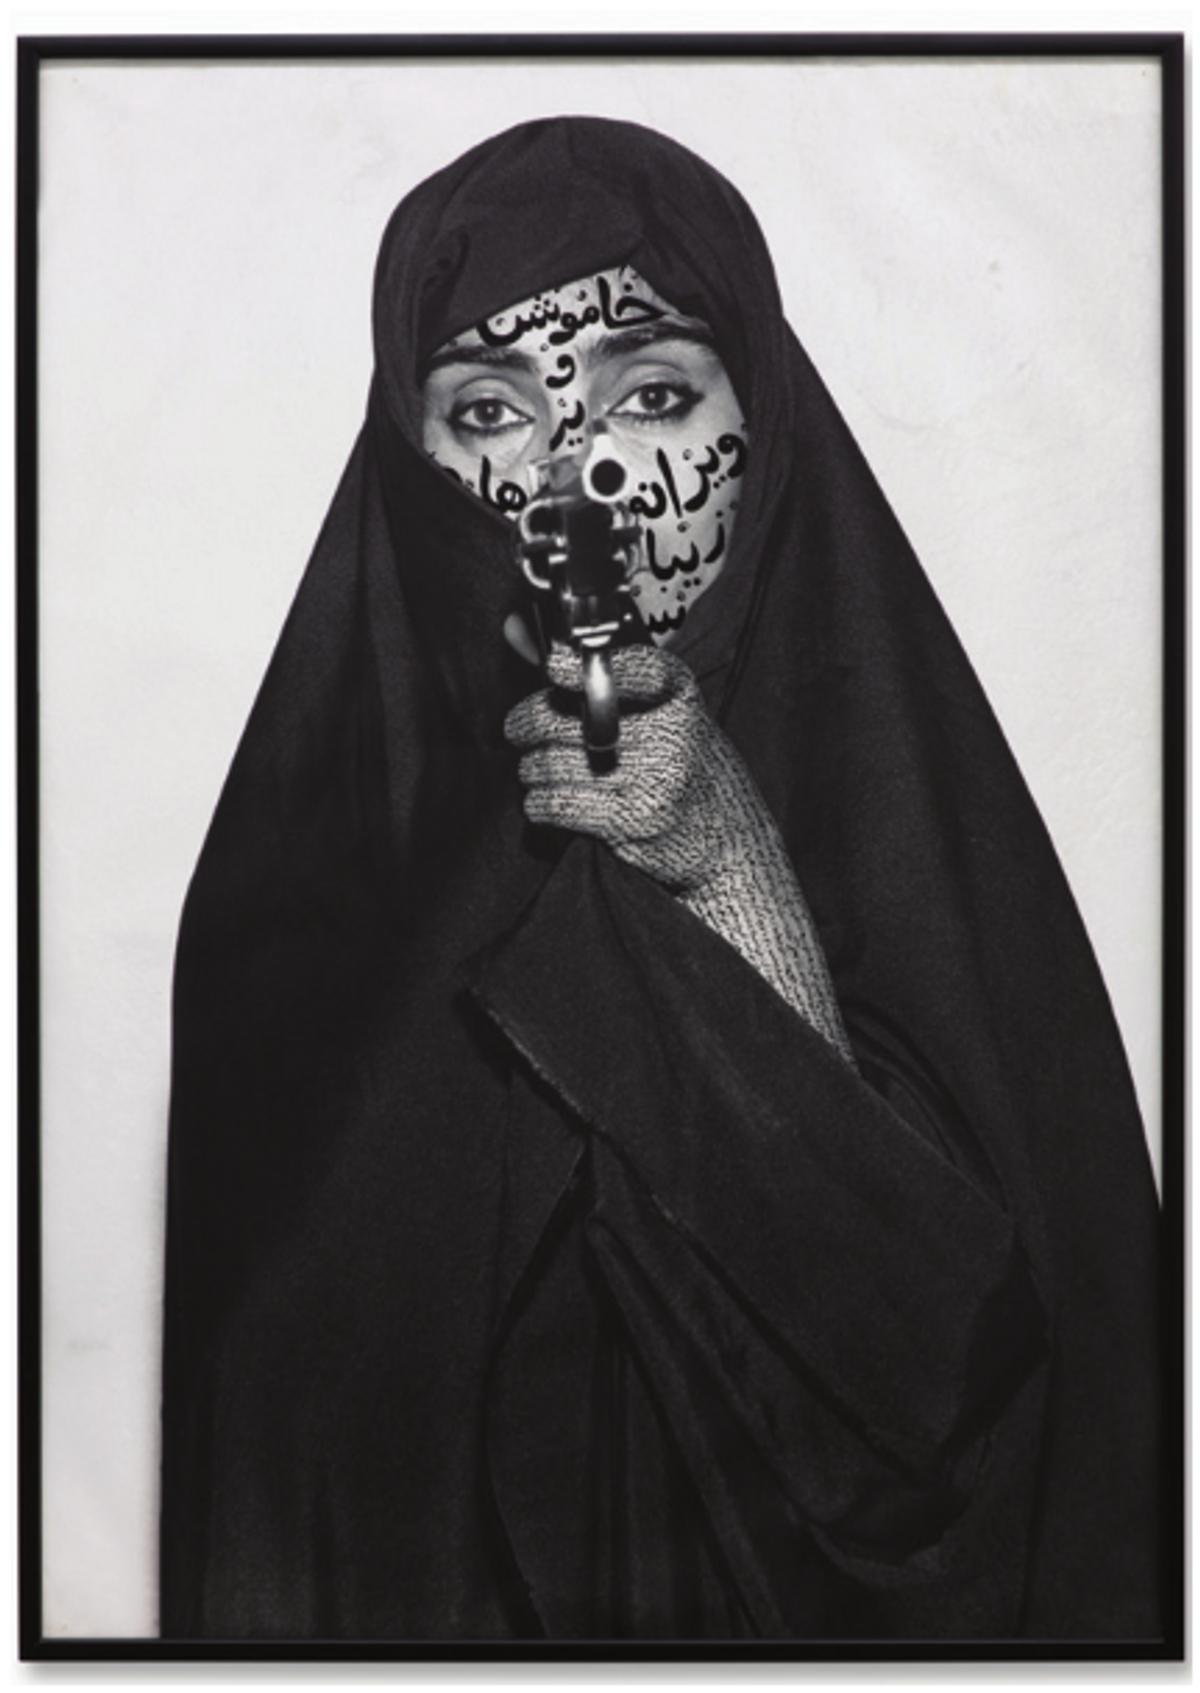 Shirin Neshat, Faceless from Women of Allah Series, 1994, photographie. Courtesy Fondazione Sandretto Re Rebaudengo
